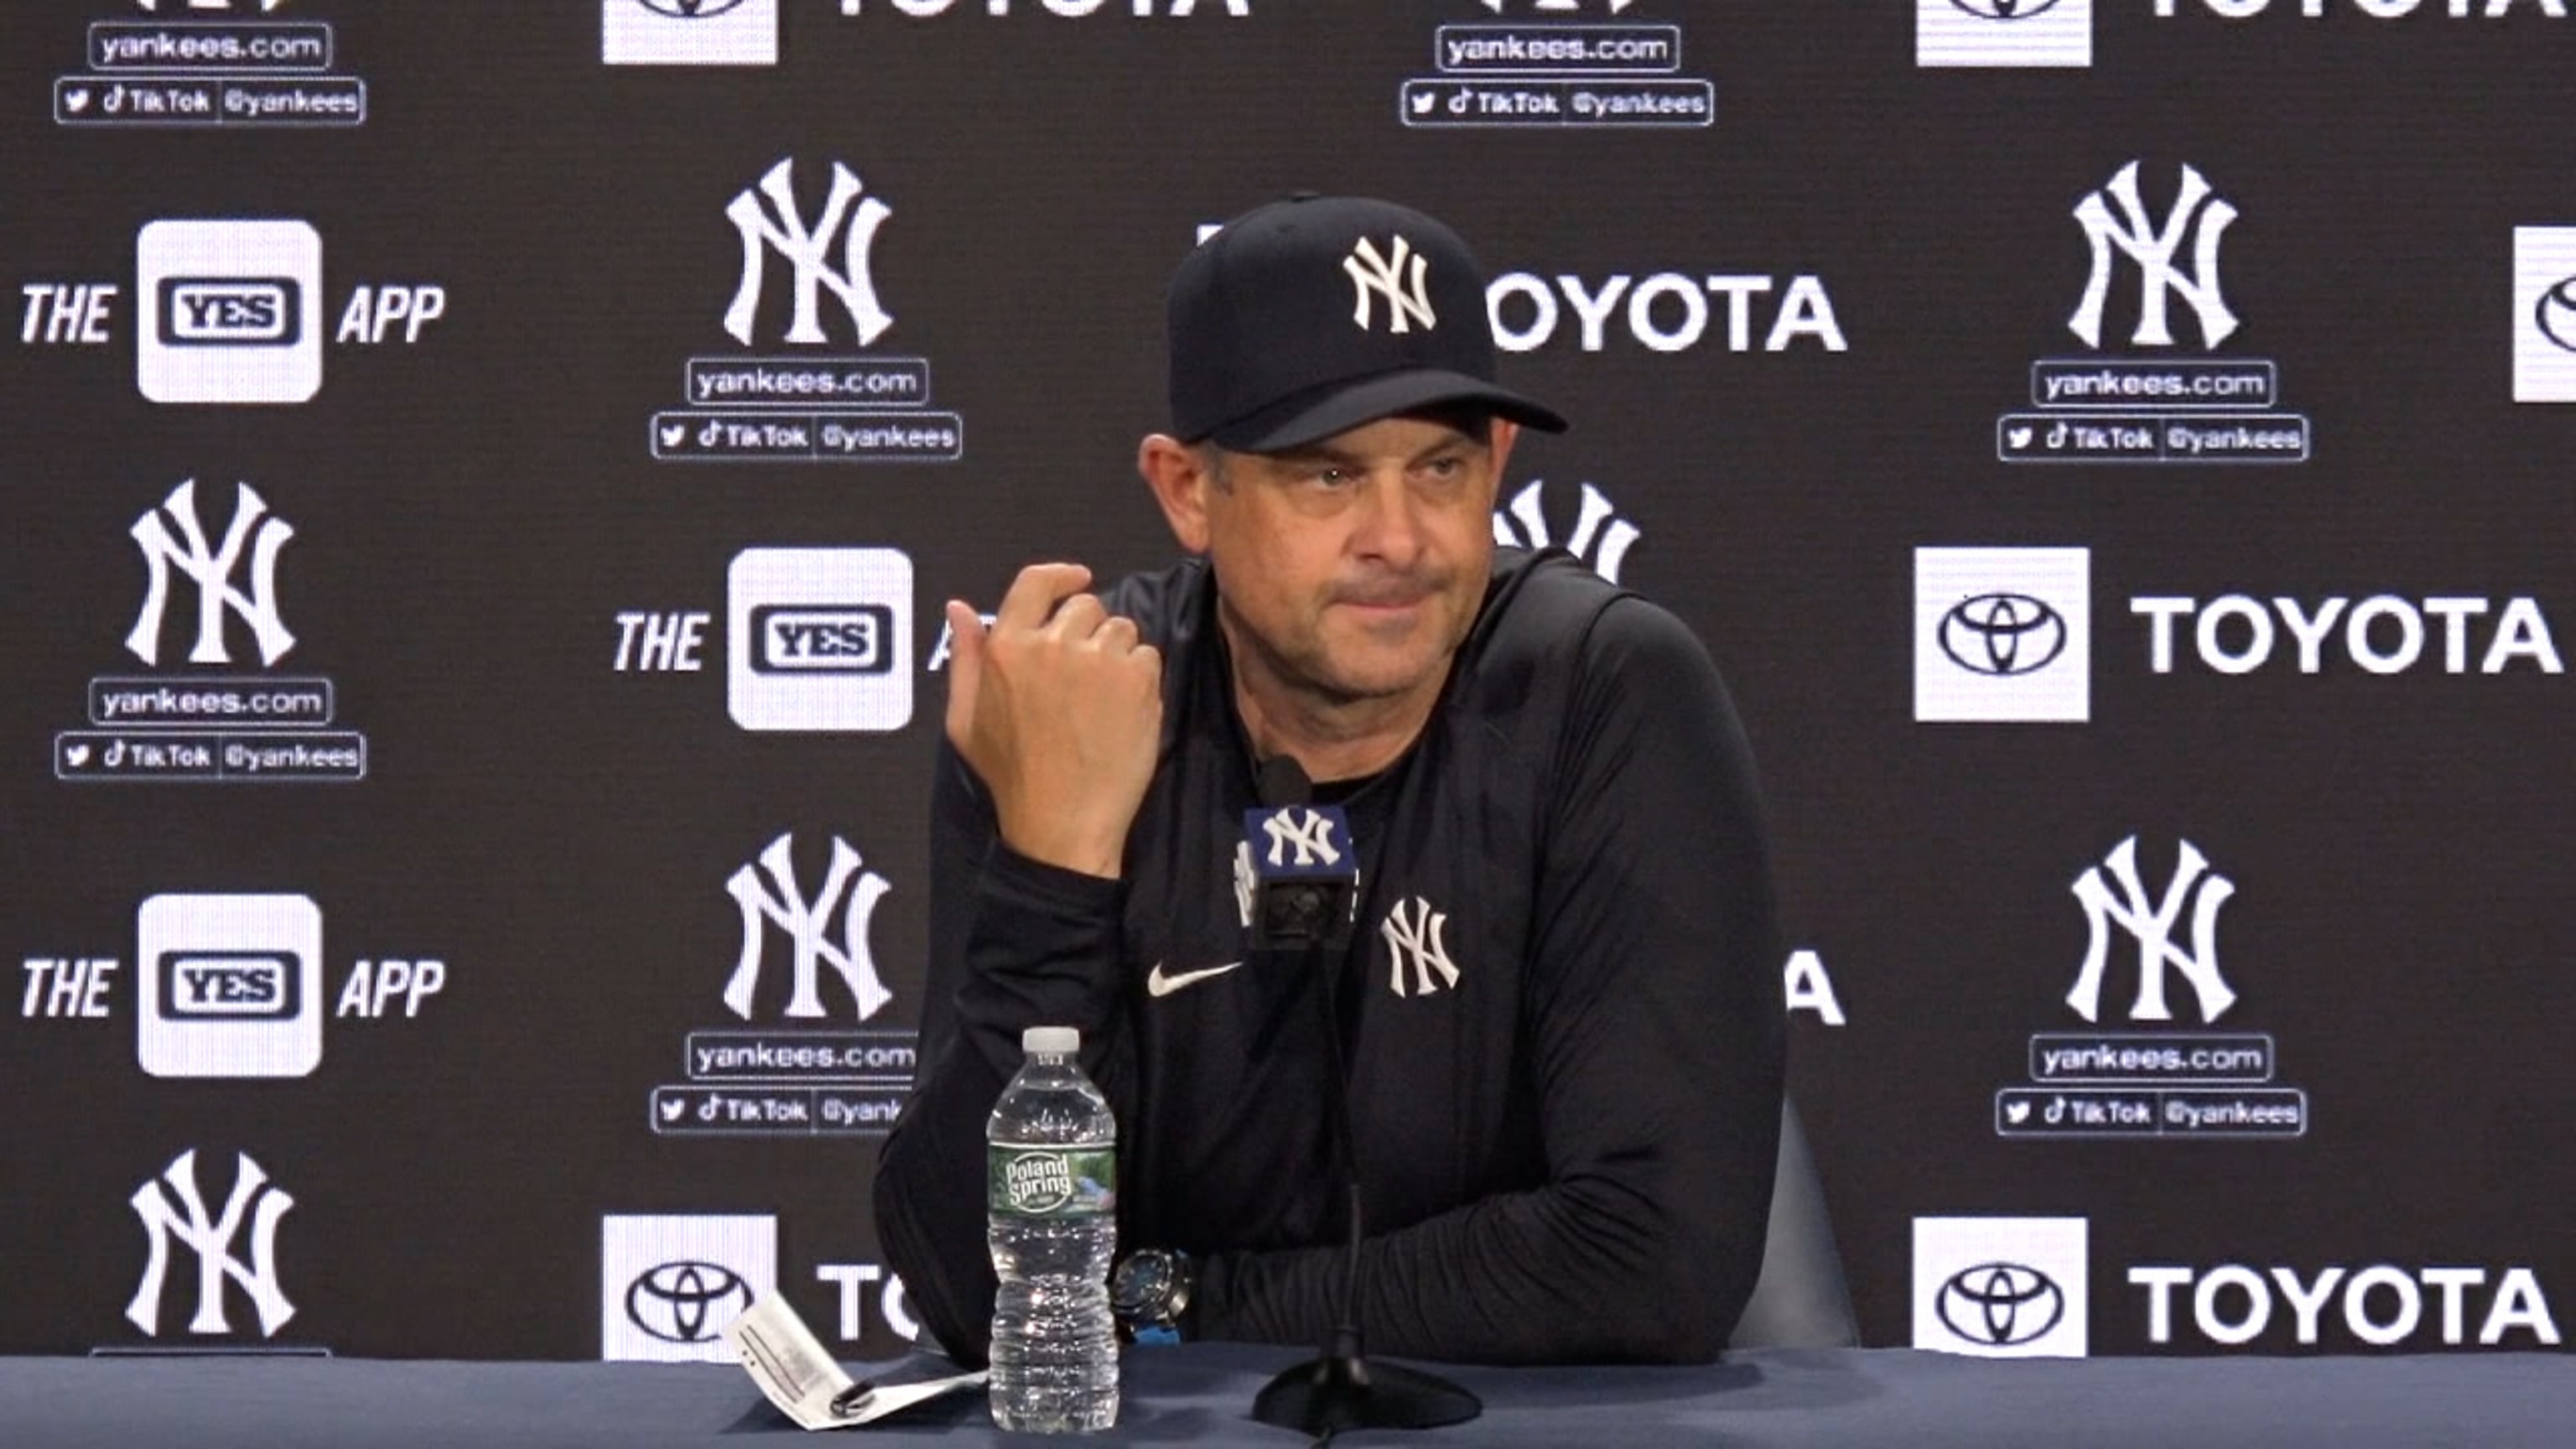 Carlos Rodon gets redemption as Yankees split Subway Series with Mets